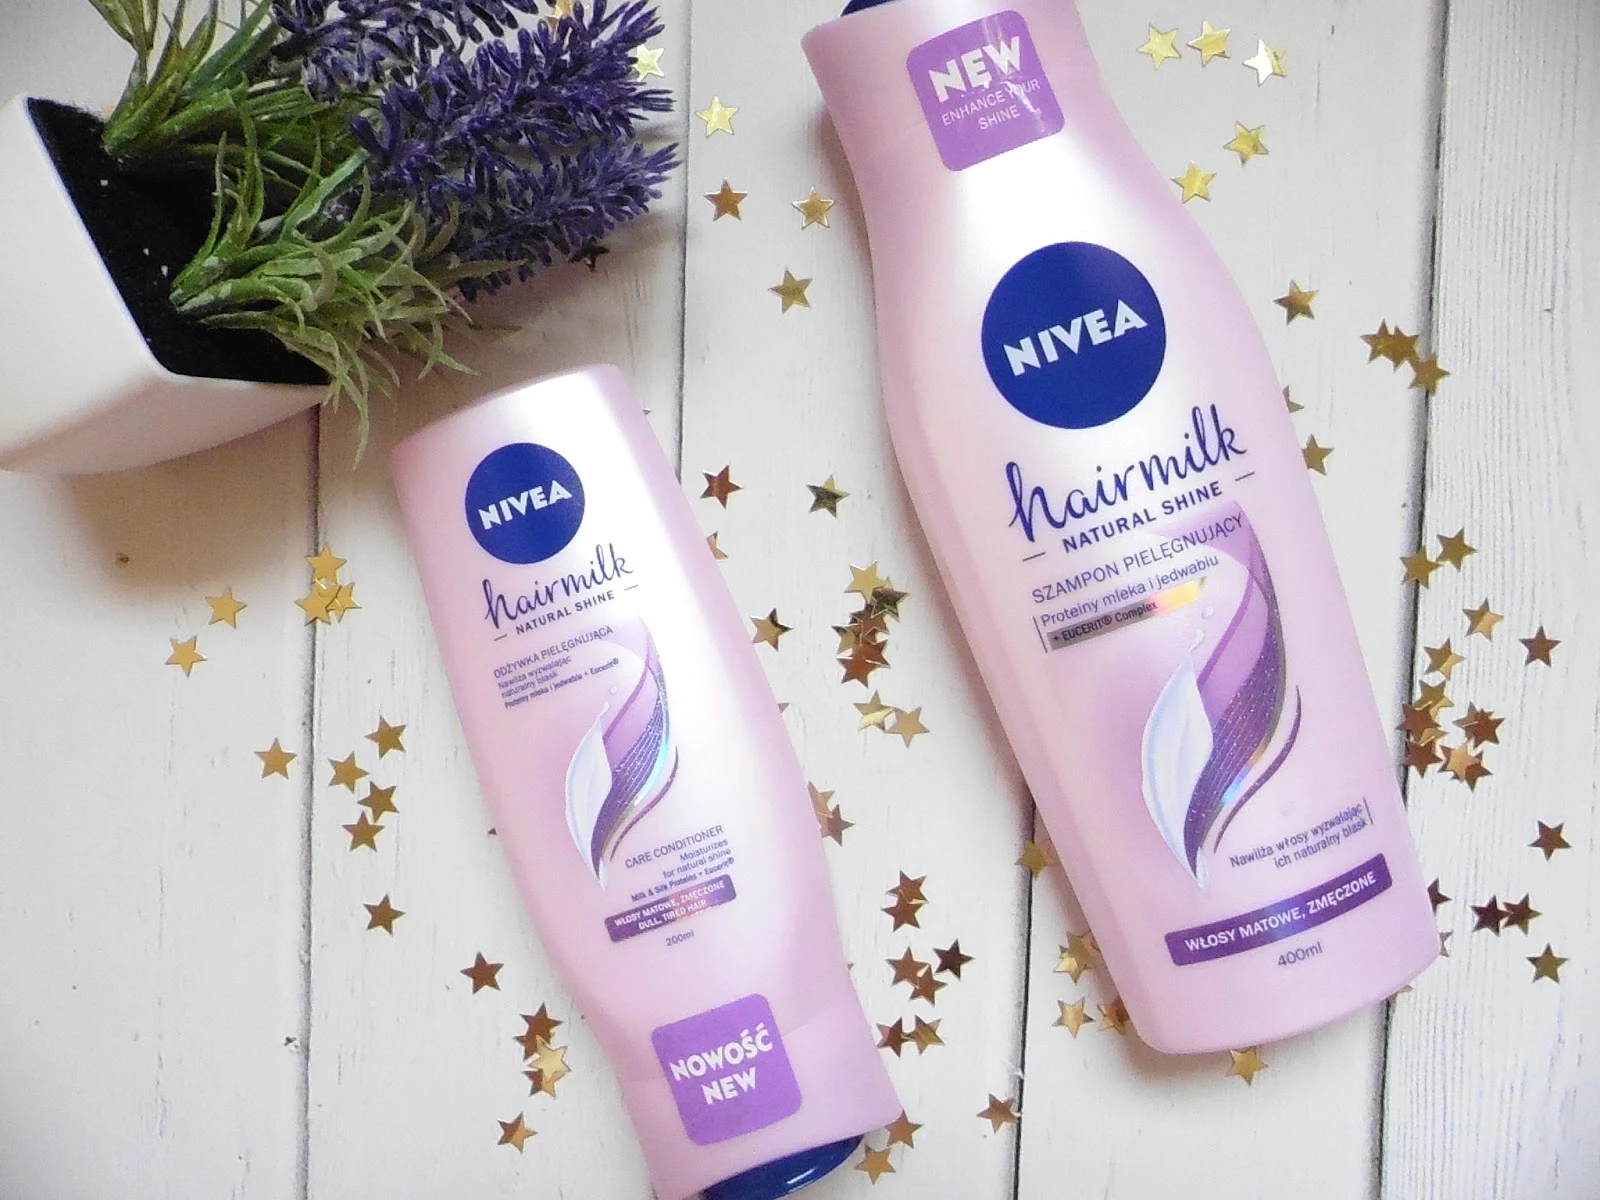 hair milk natural shine szampon opinie